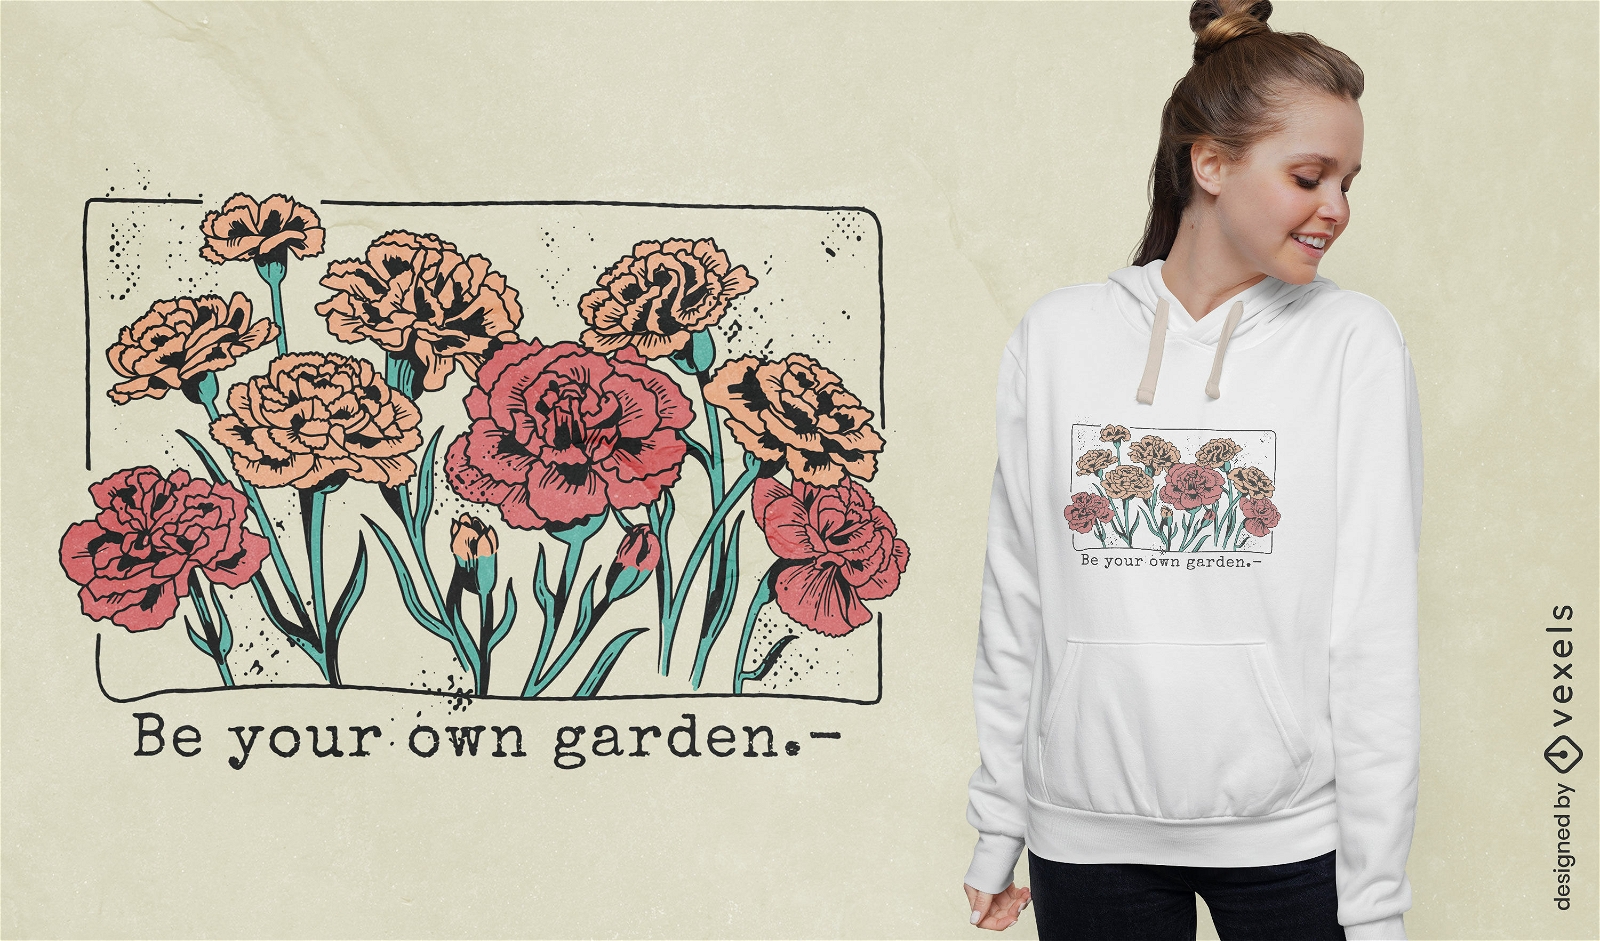 Carnation flowers garden quote t-shirt design